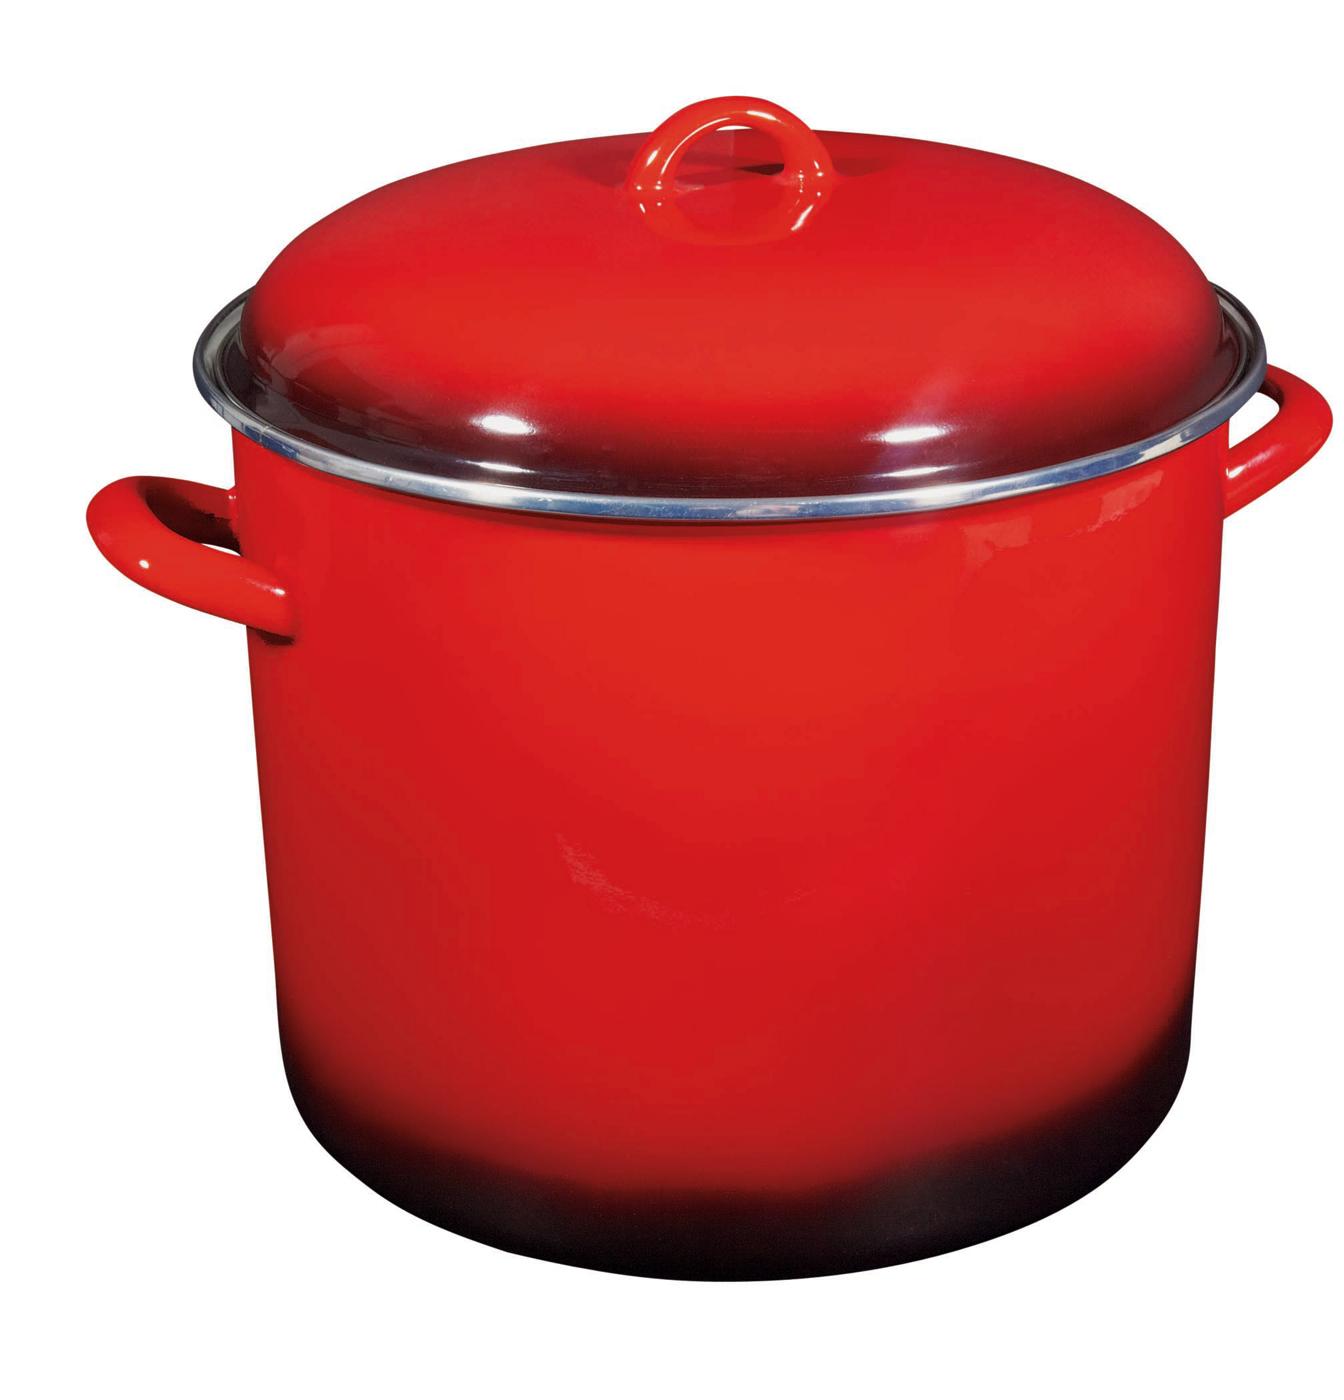 Cocinaware Red Enamel Stock Pot - Shop Stock Pots & Sauce Pans at